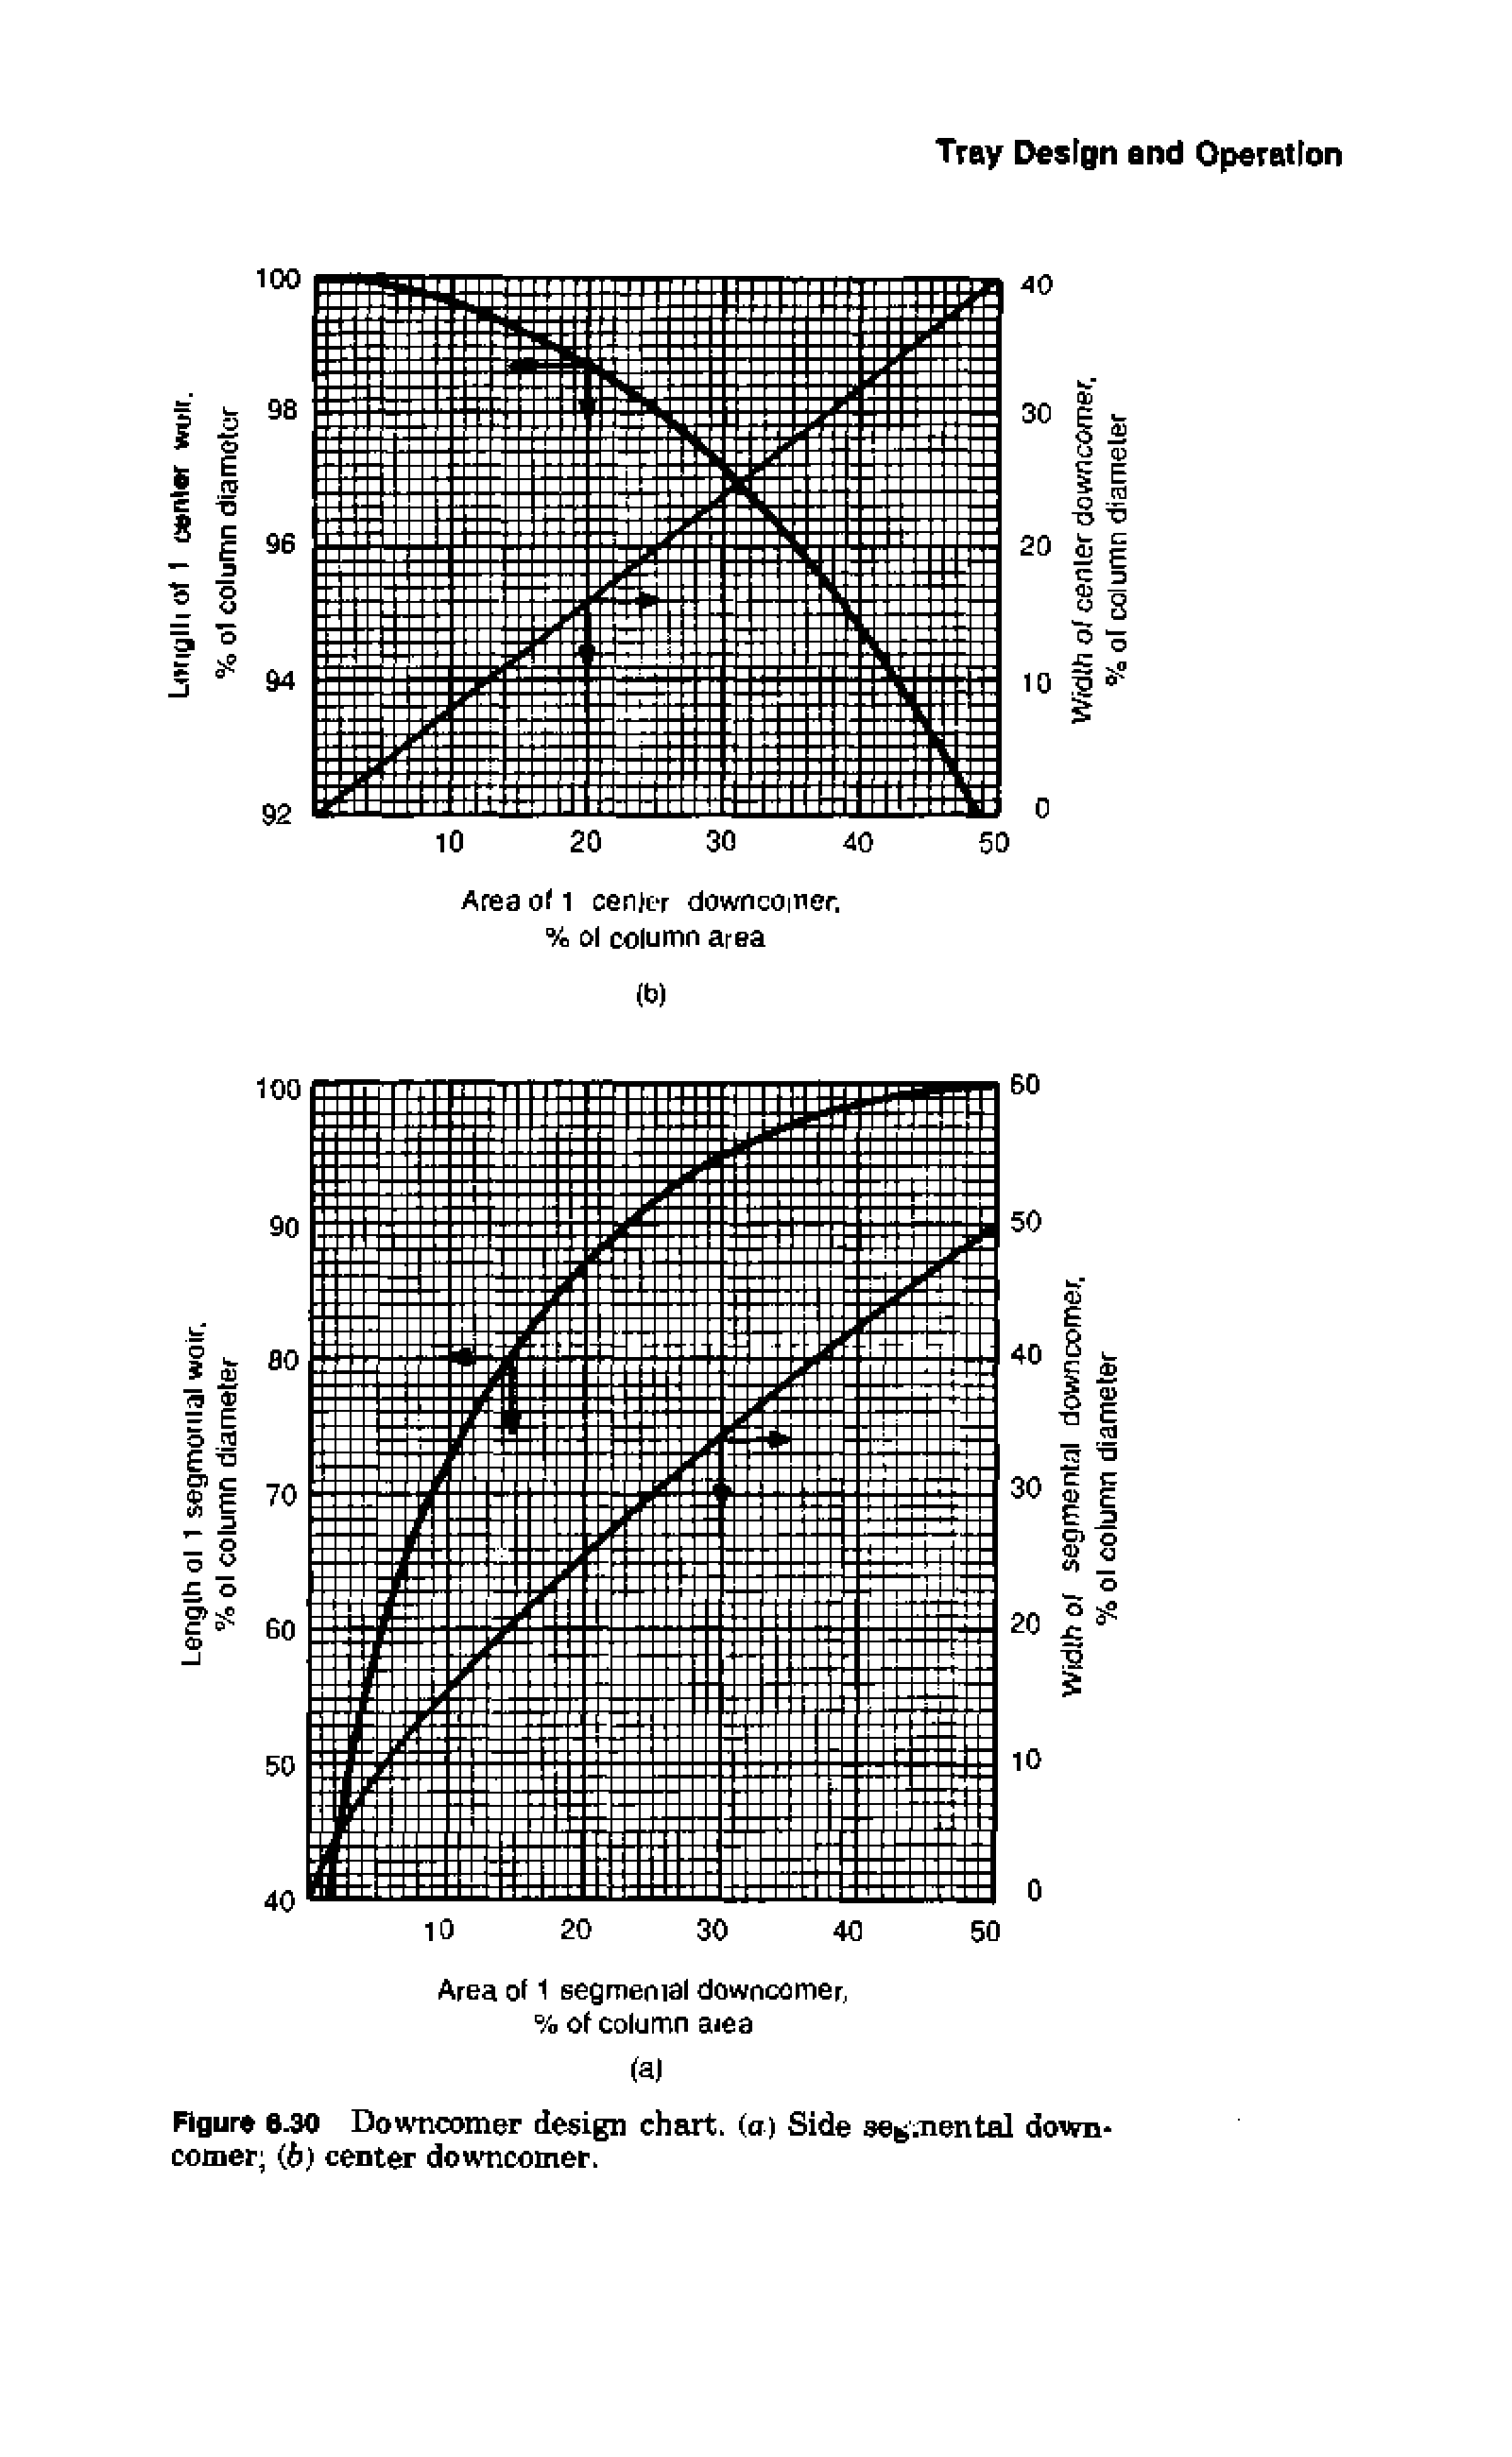 Figure 8.30 Downcomer design chart, (o) Side segmental downcomer (b) center downcomer.